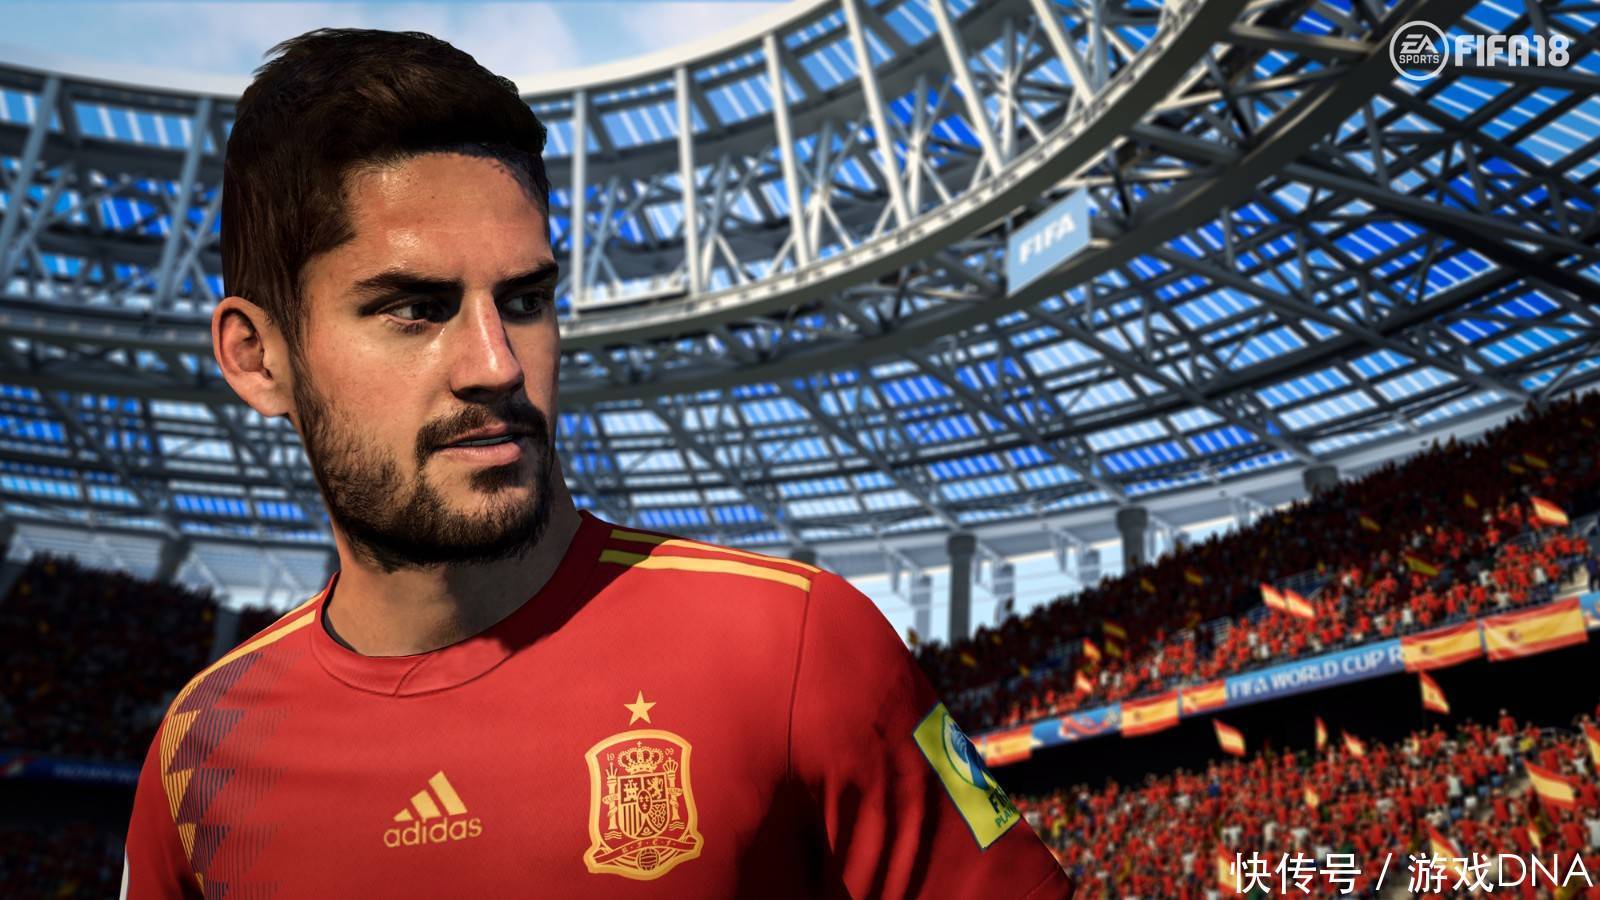 《FIFA18》世界杯DLC首批8K截图曝光 梅西纹